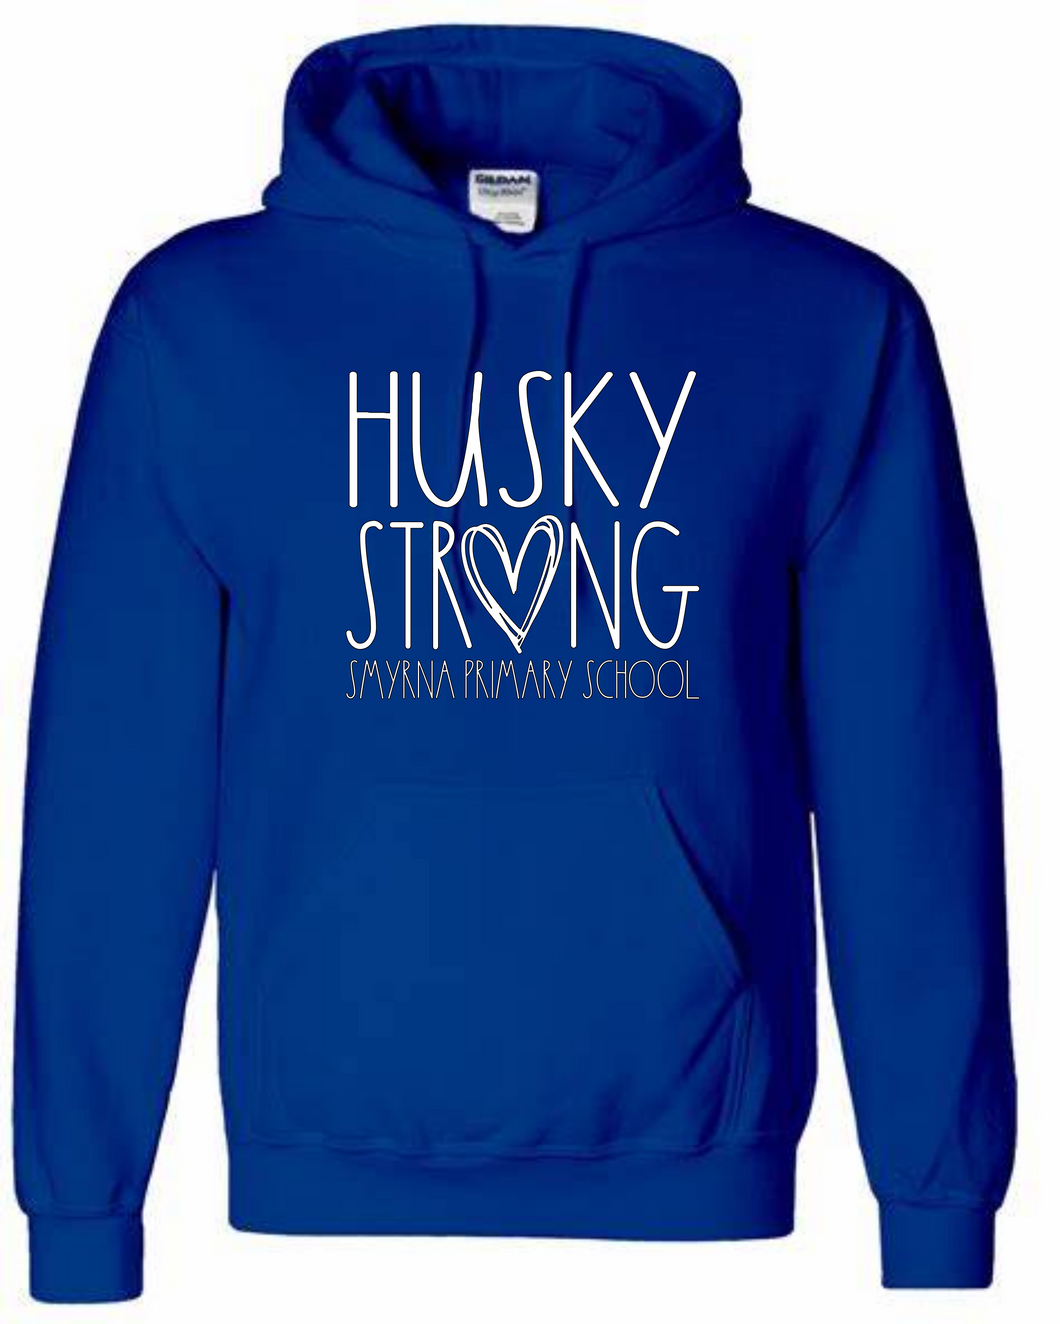 Husky Strong Hoodie